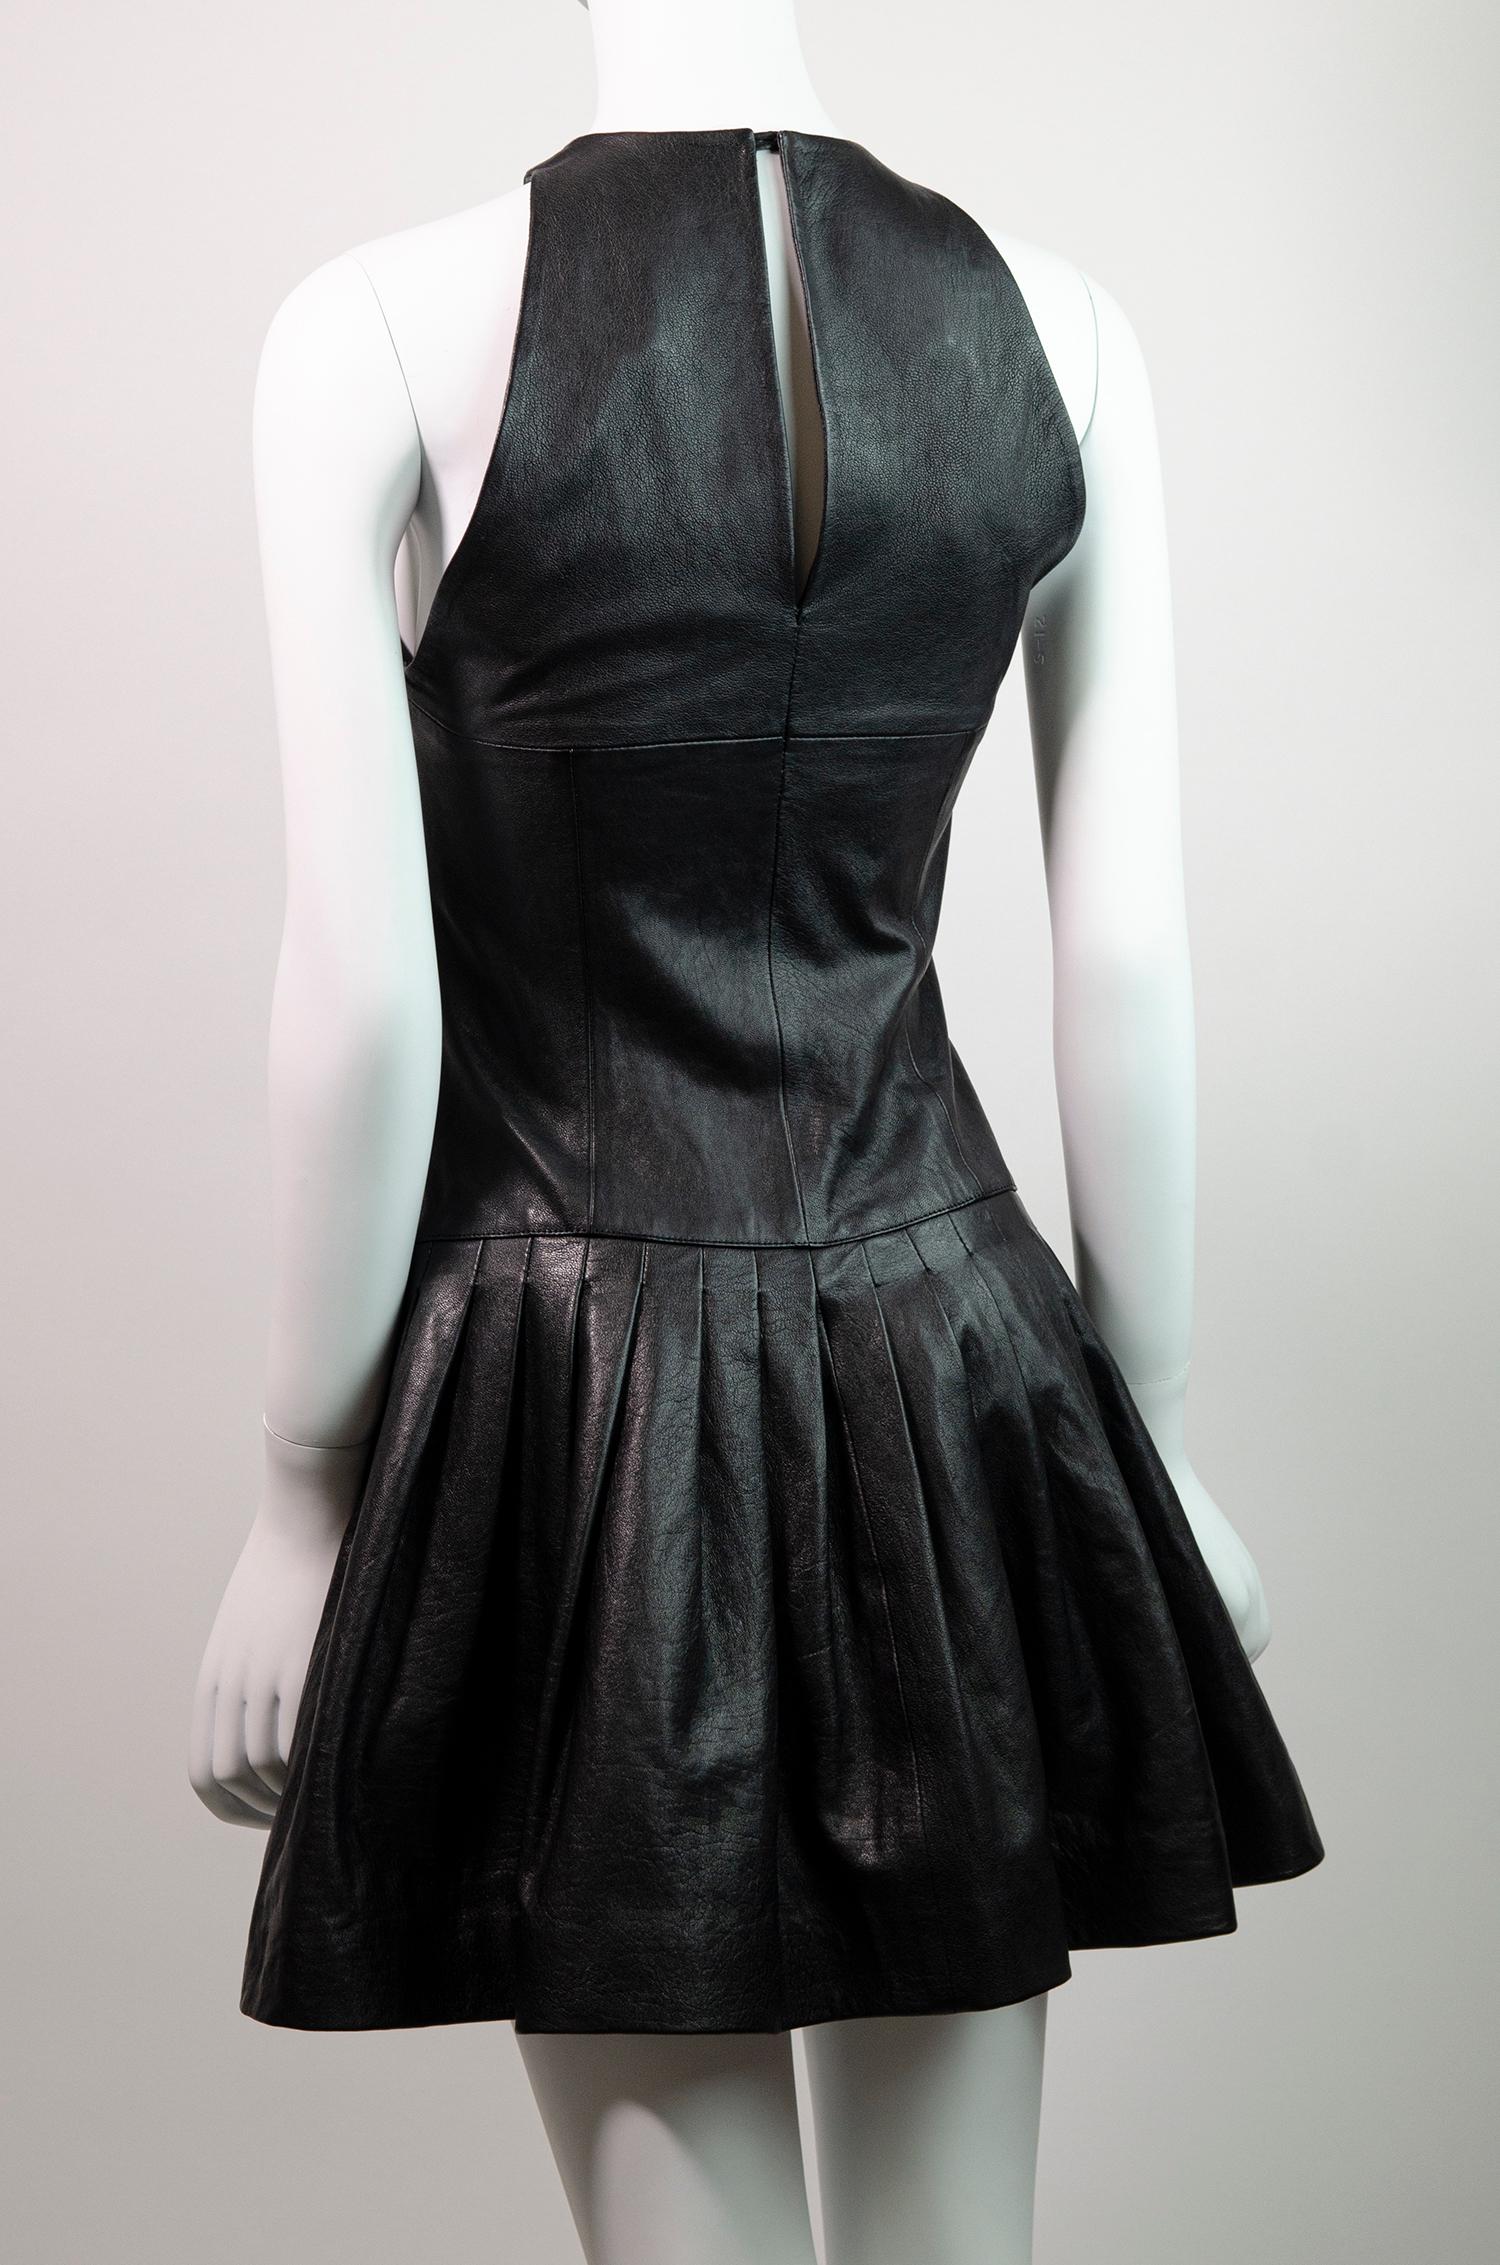 SAINT LAURENT BY HEDI SLIMANE 2014 Black Leather Mini Dress For Sale 4